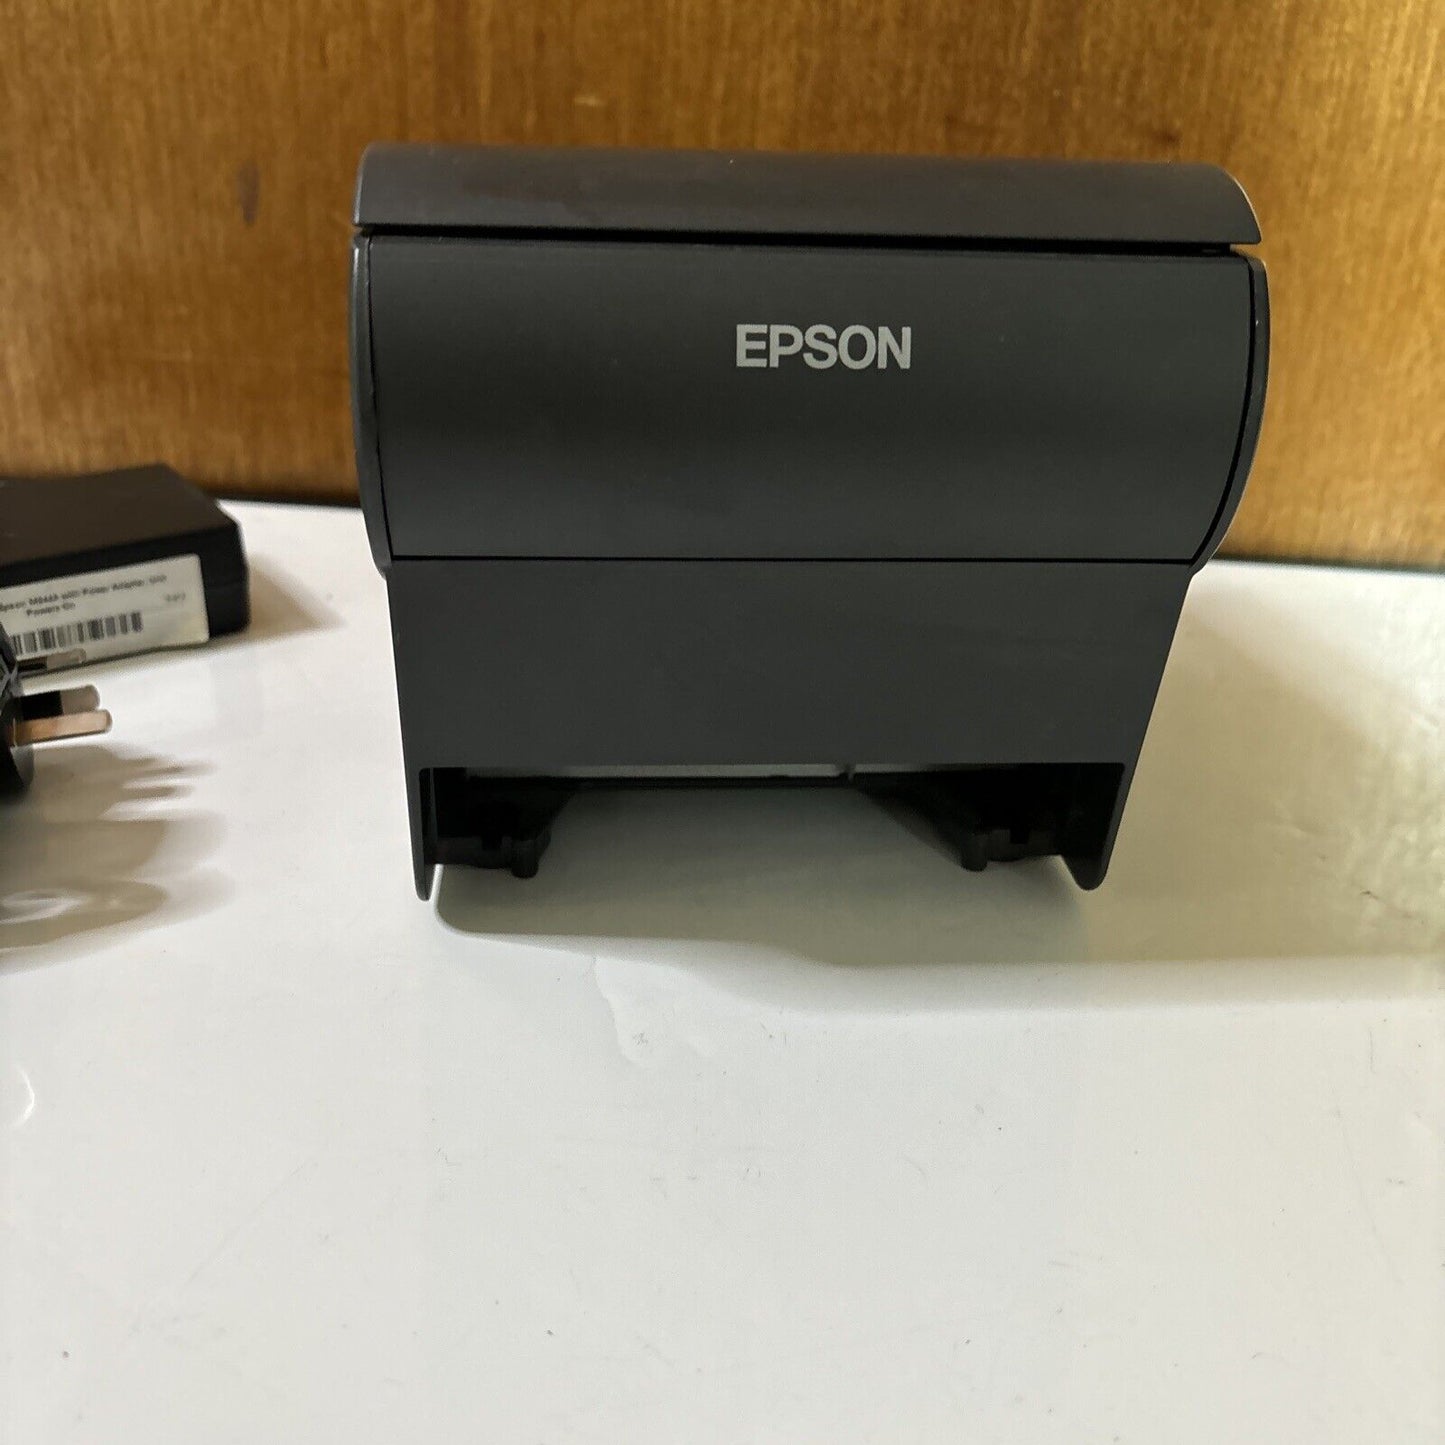 EPSON TM-T88V Thermal Receipt Printer Model M244A